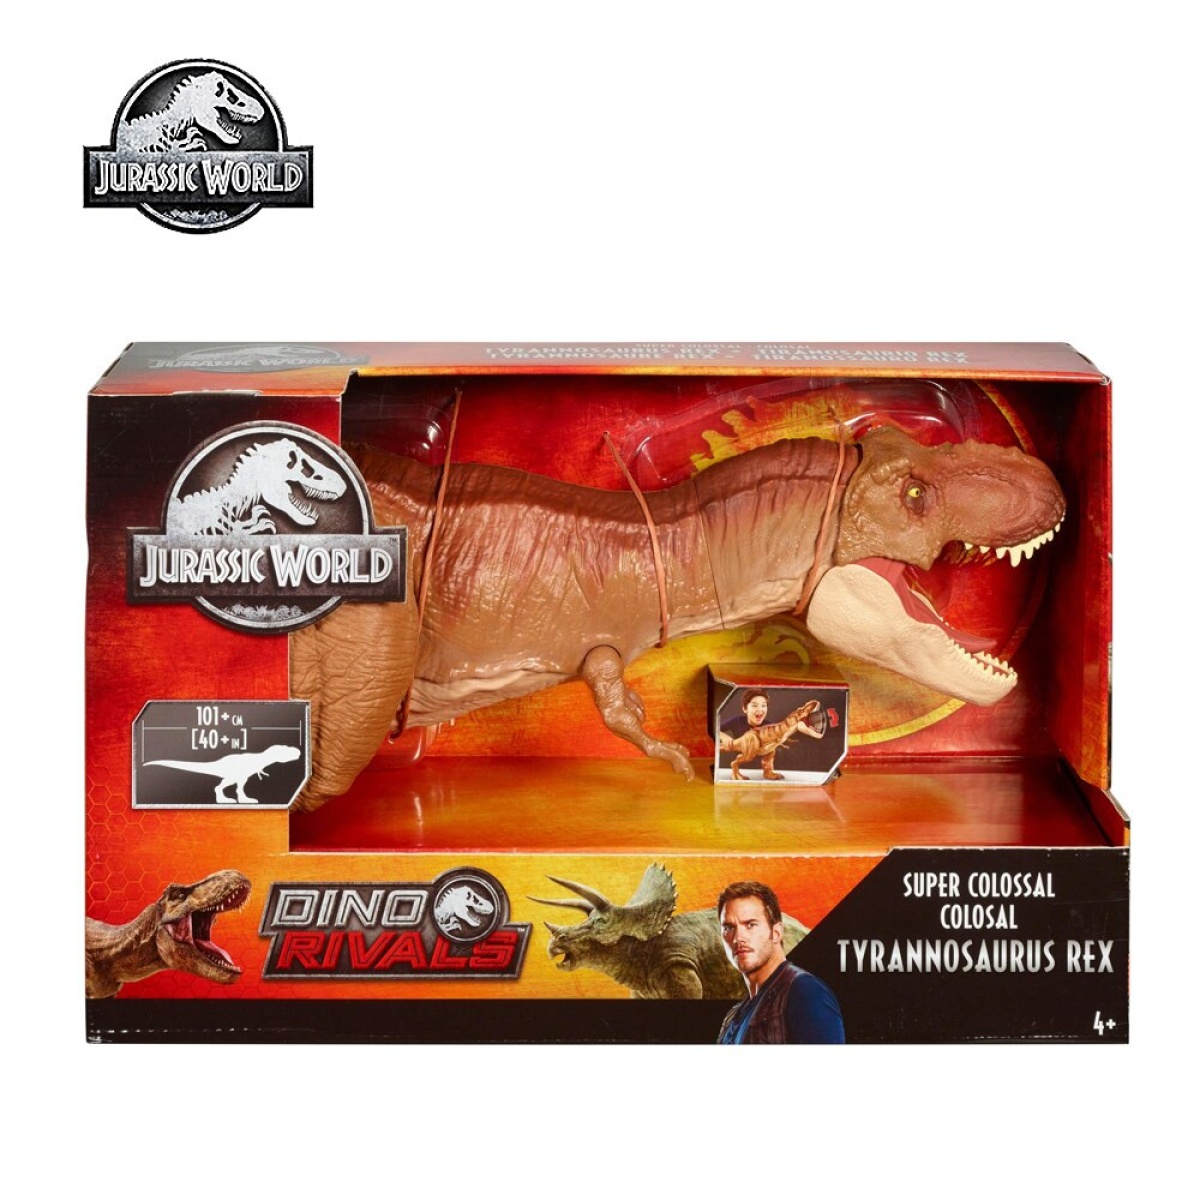 Super Colossal Tyrannosaurus Rex by Mattel Jurassic World - Dan's Dinosaurs